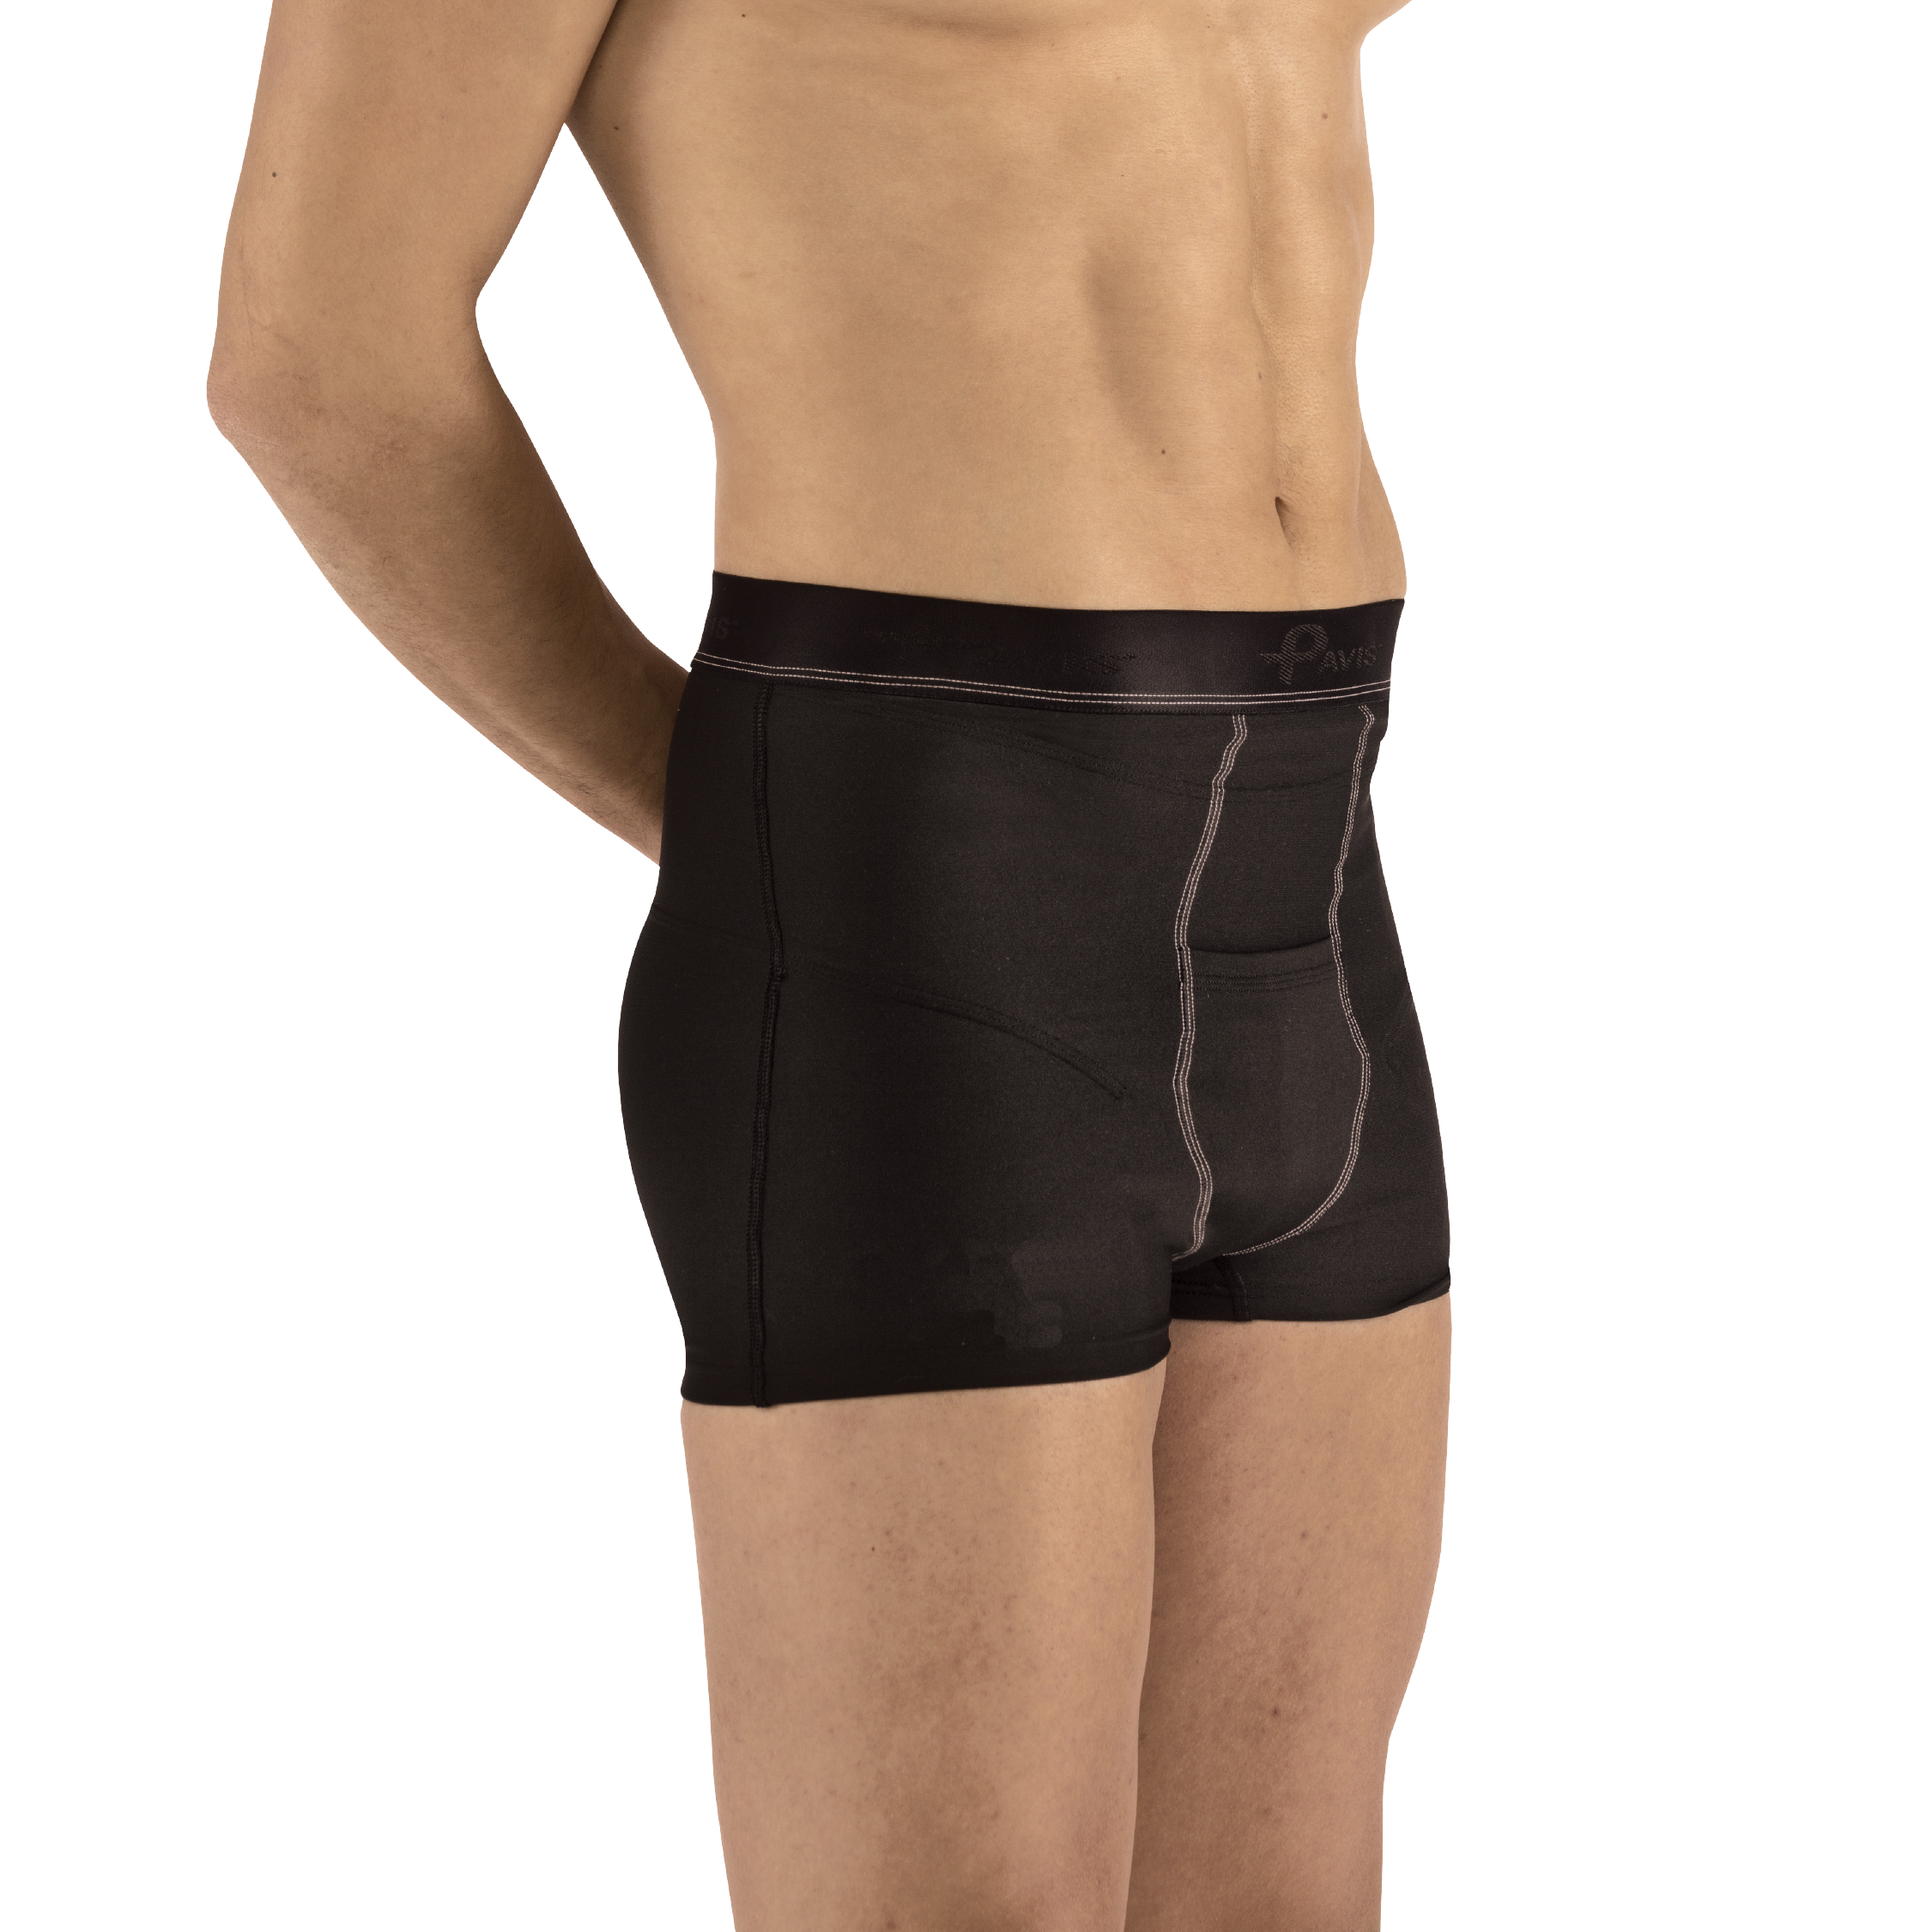 Pavis® Hernia Compression Boxer Shorts